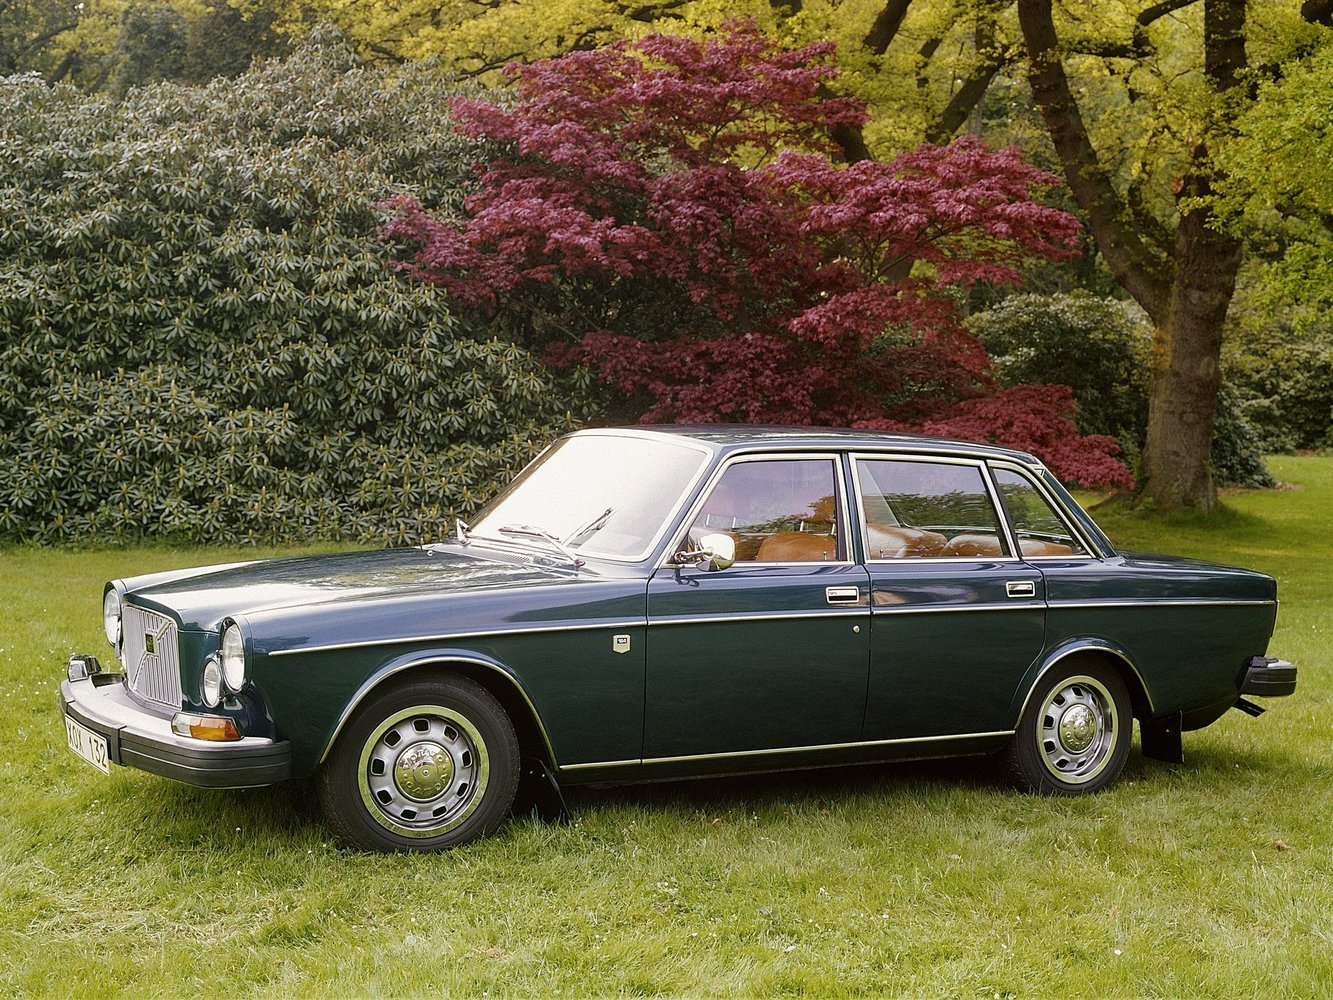 седан Volvo 164 1968 - 1974г выпуска модификация 2.9 MT (131 л.с.)